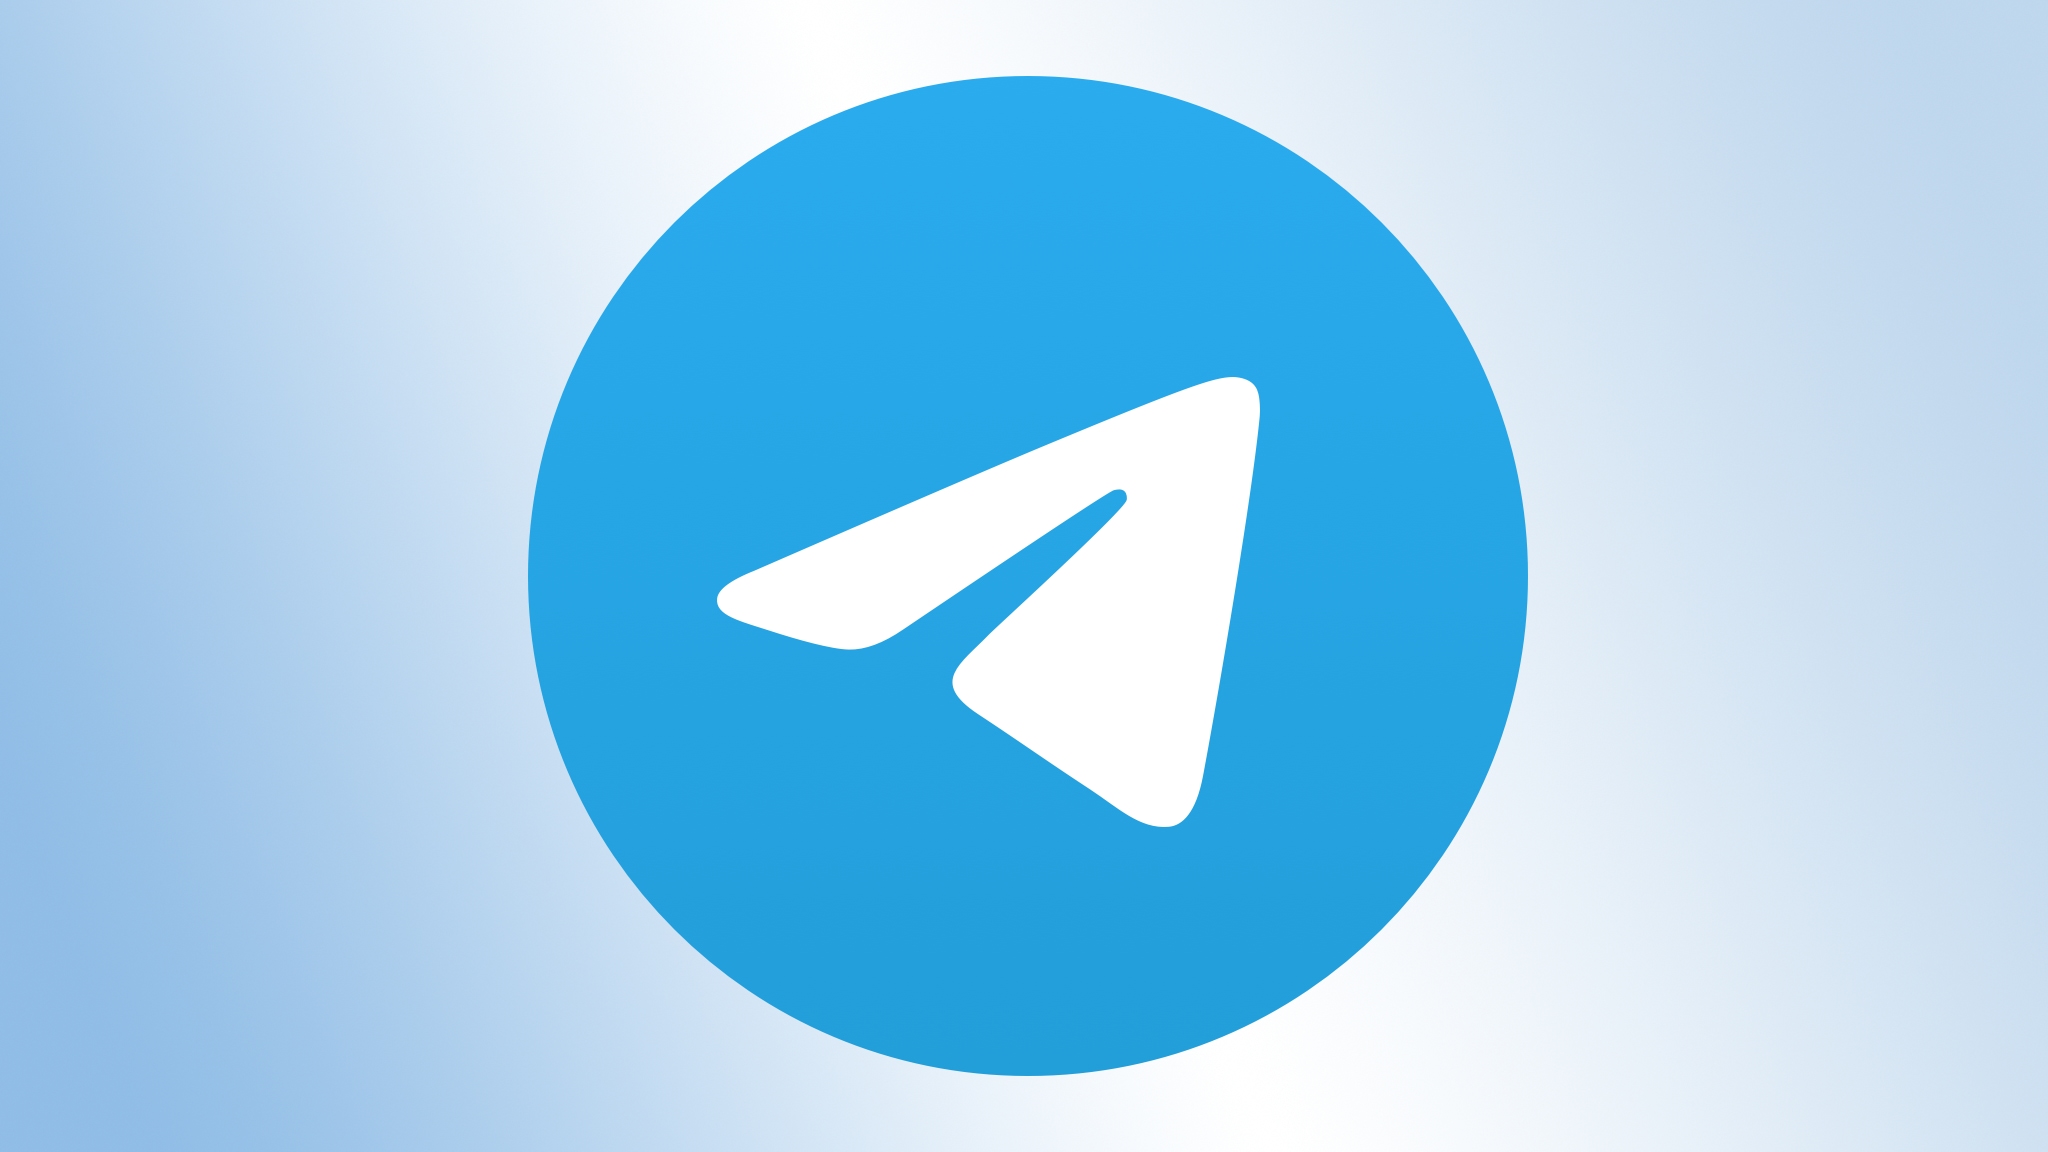 Telegram logo set against a light blue gradient background 